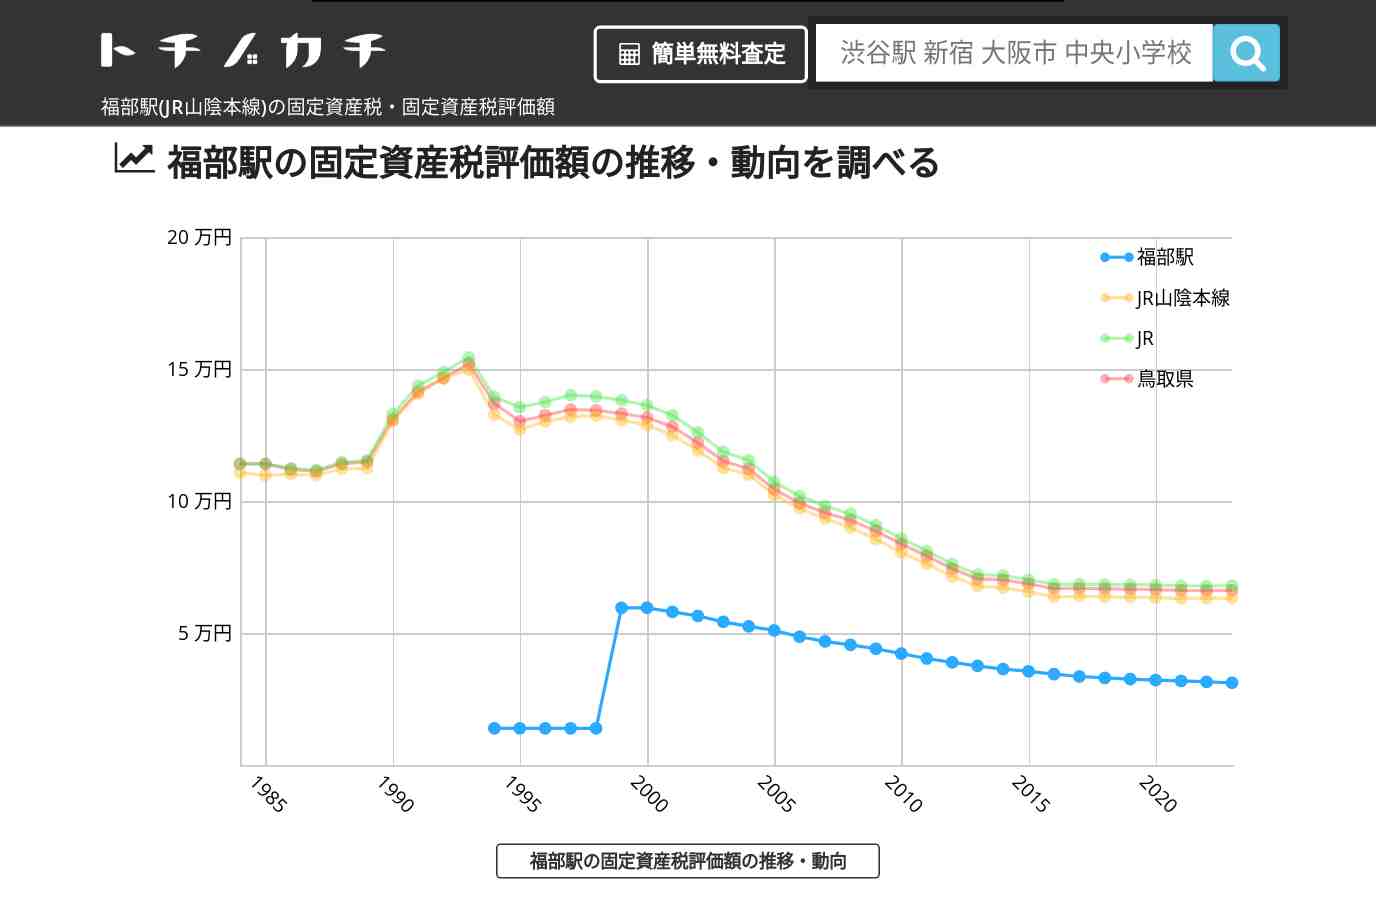 福部駅(JR山陰本線)の固定資産税・固定資産税評価額 | トチノカチ